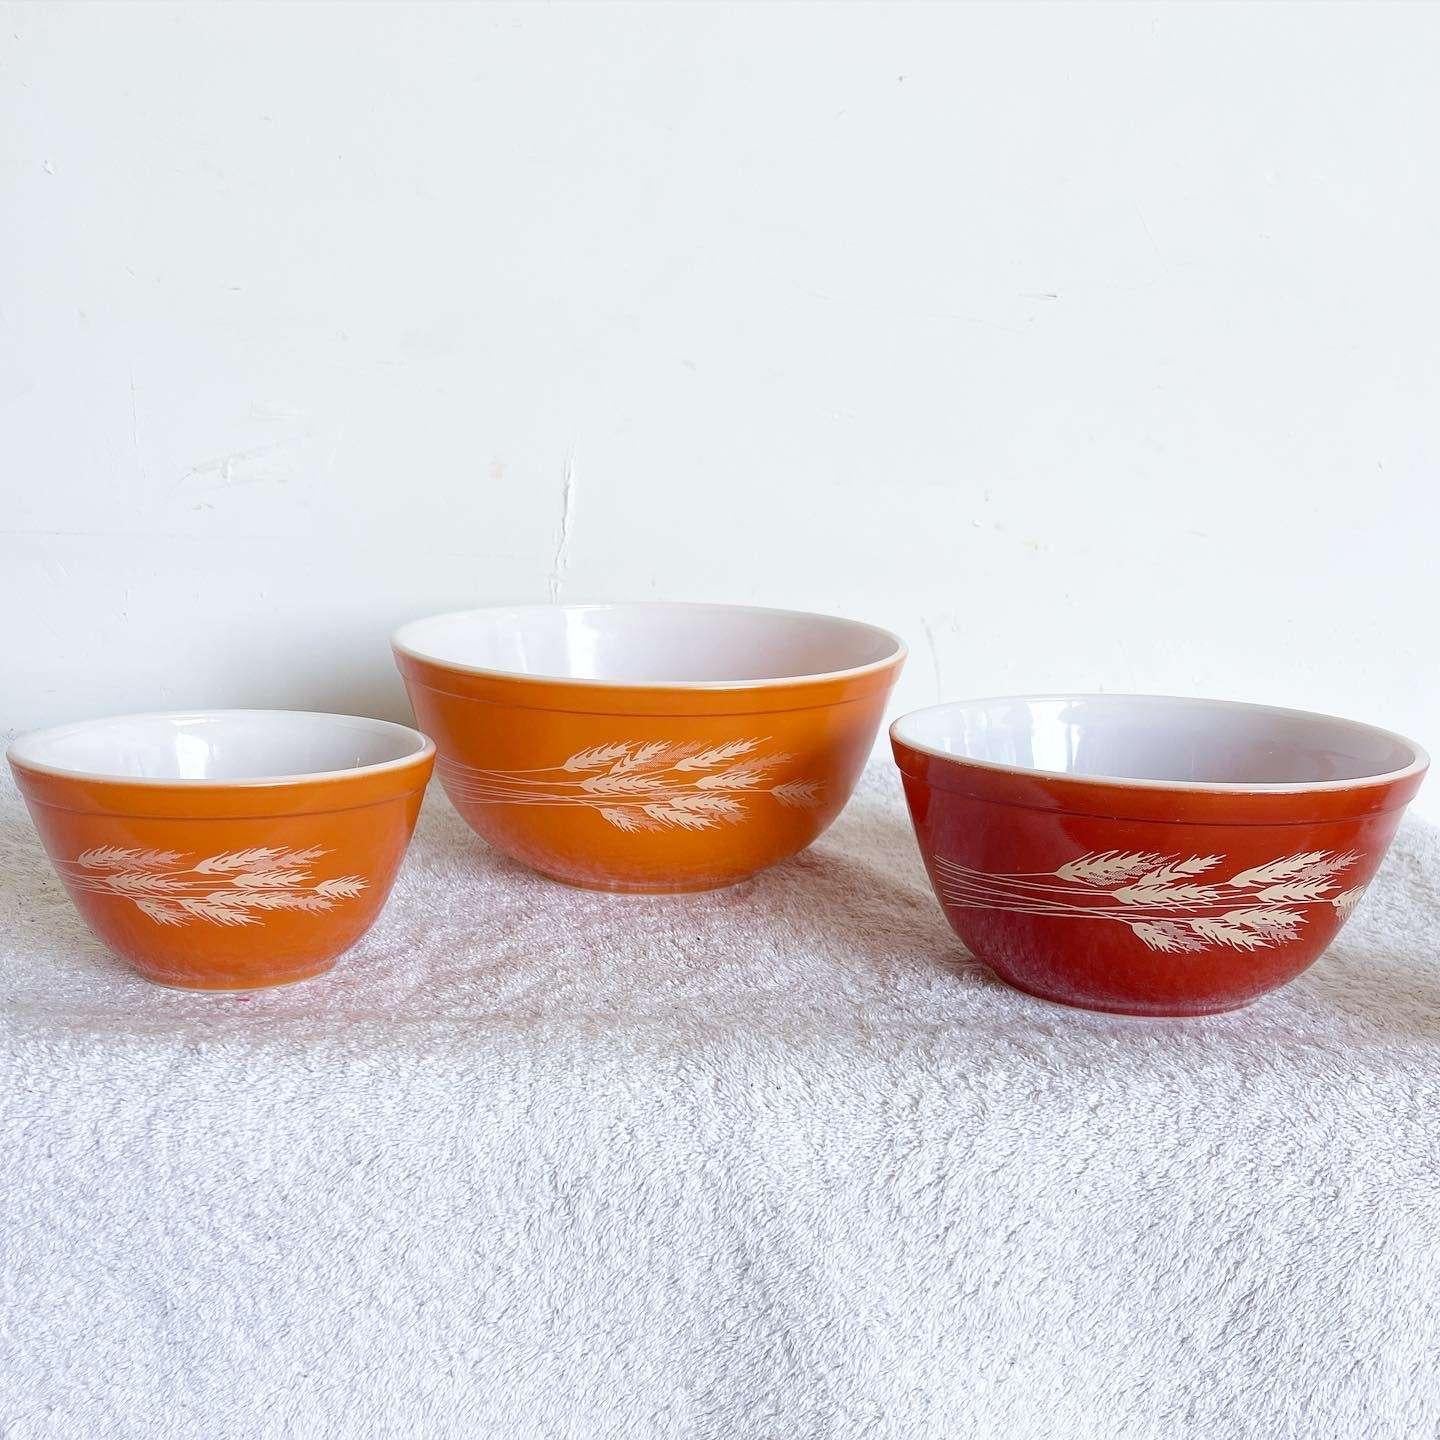 Vintage Autumn Harvest Bowls by Pyrex - Set of 3 For Sale